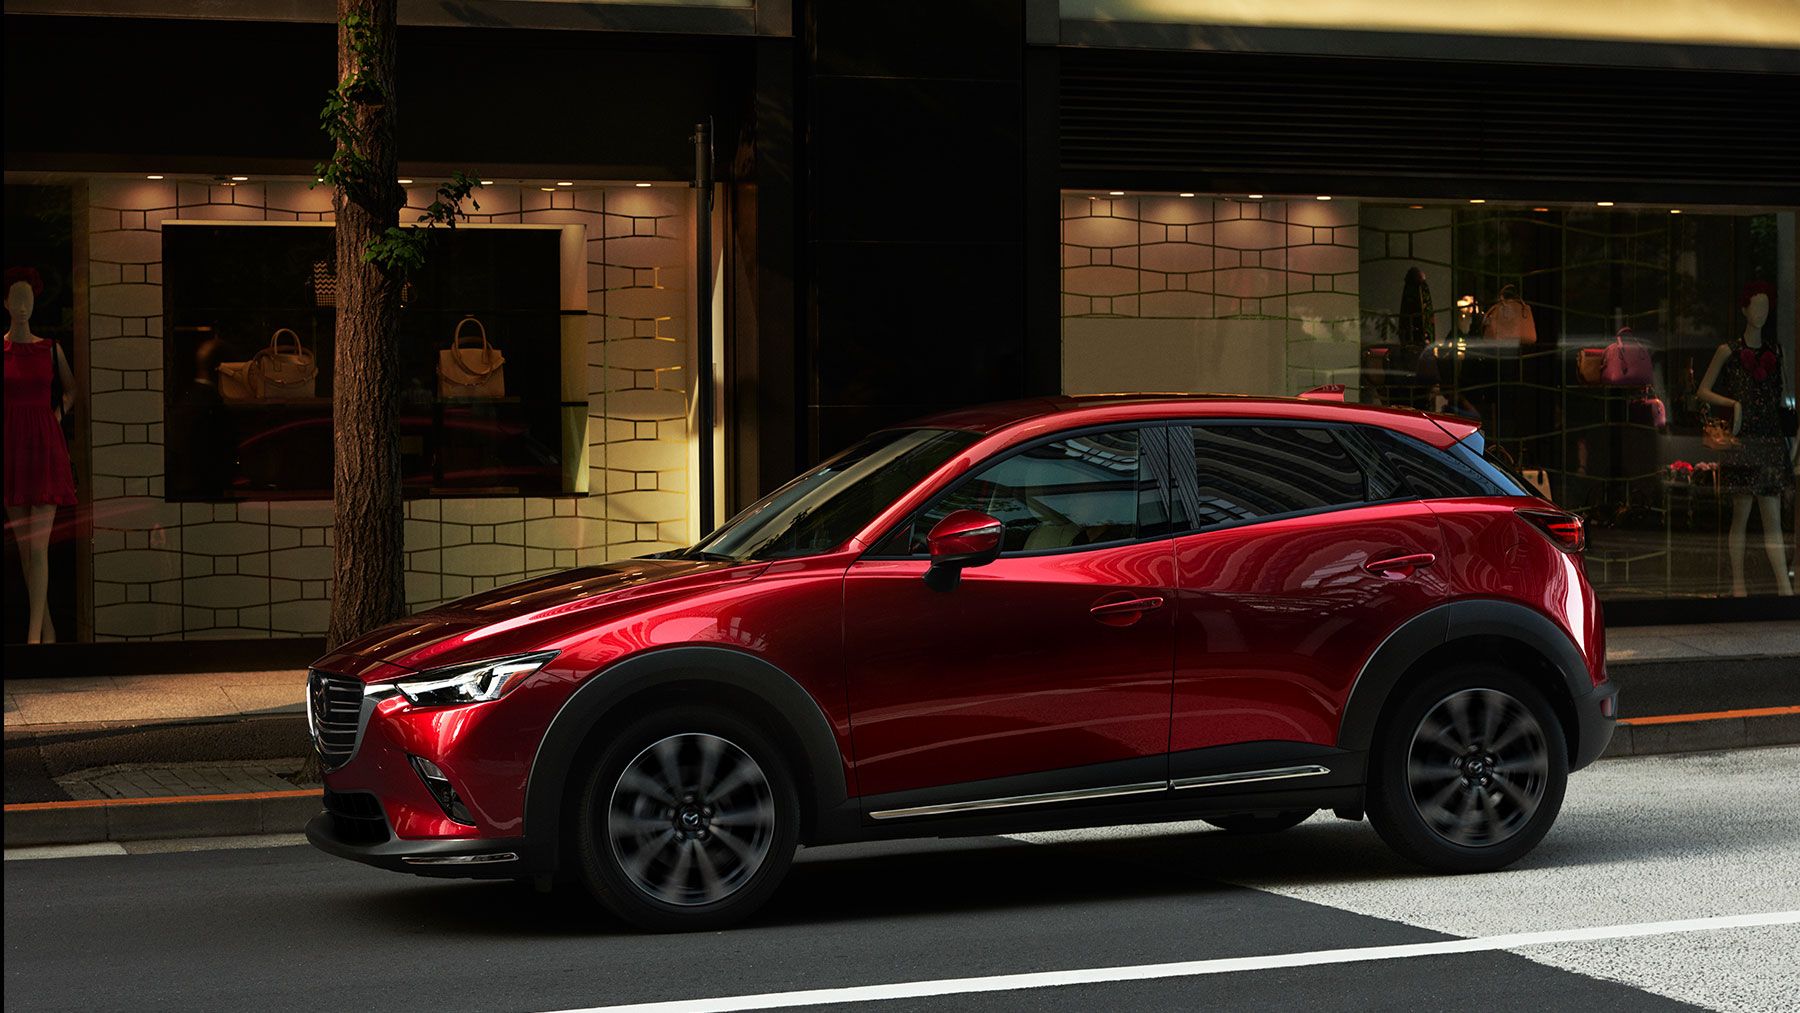 Used Mazda CX-3 4x4 (2015 - 2020) Review